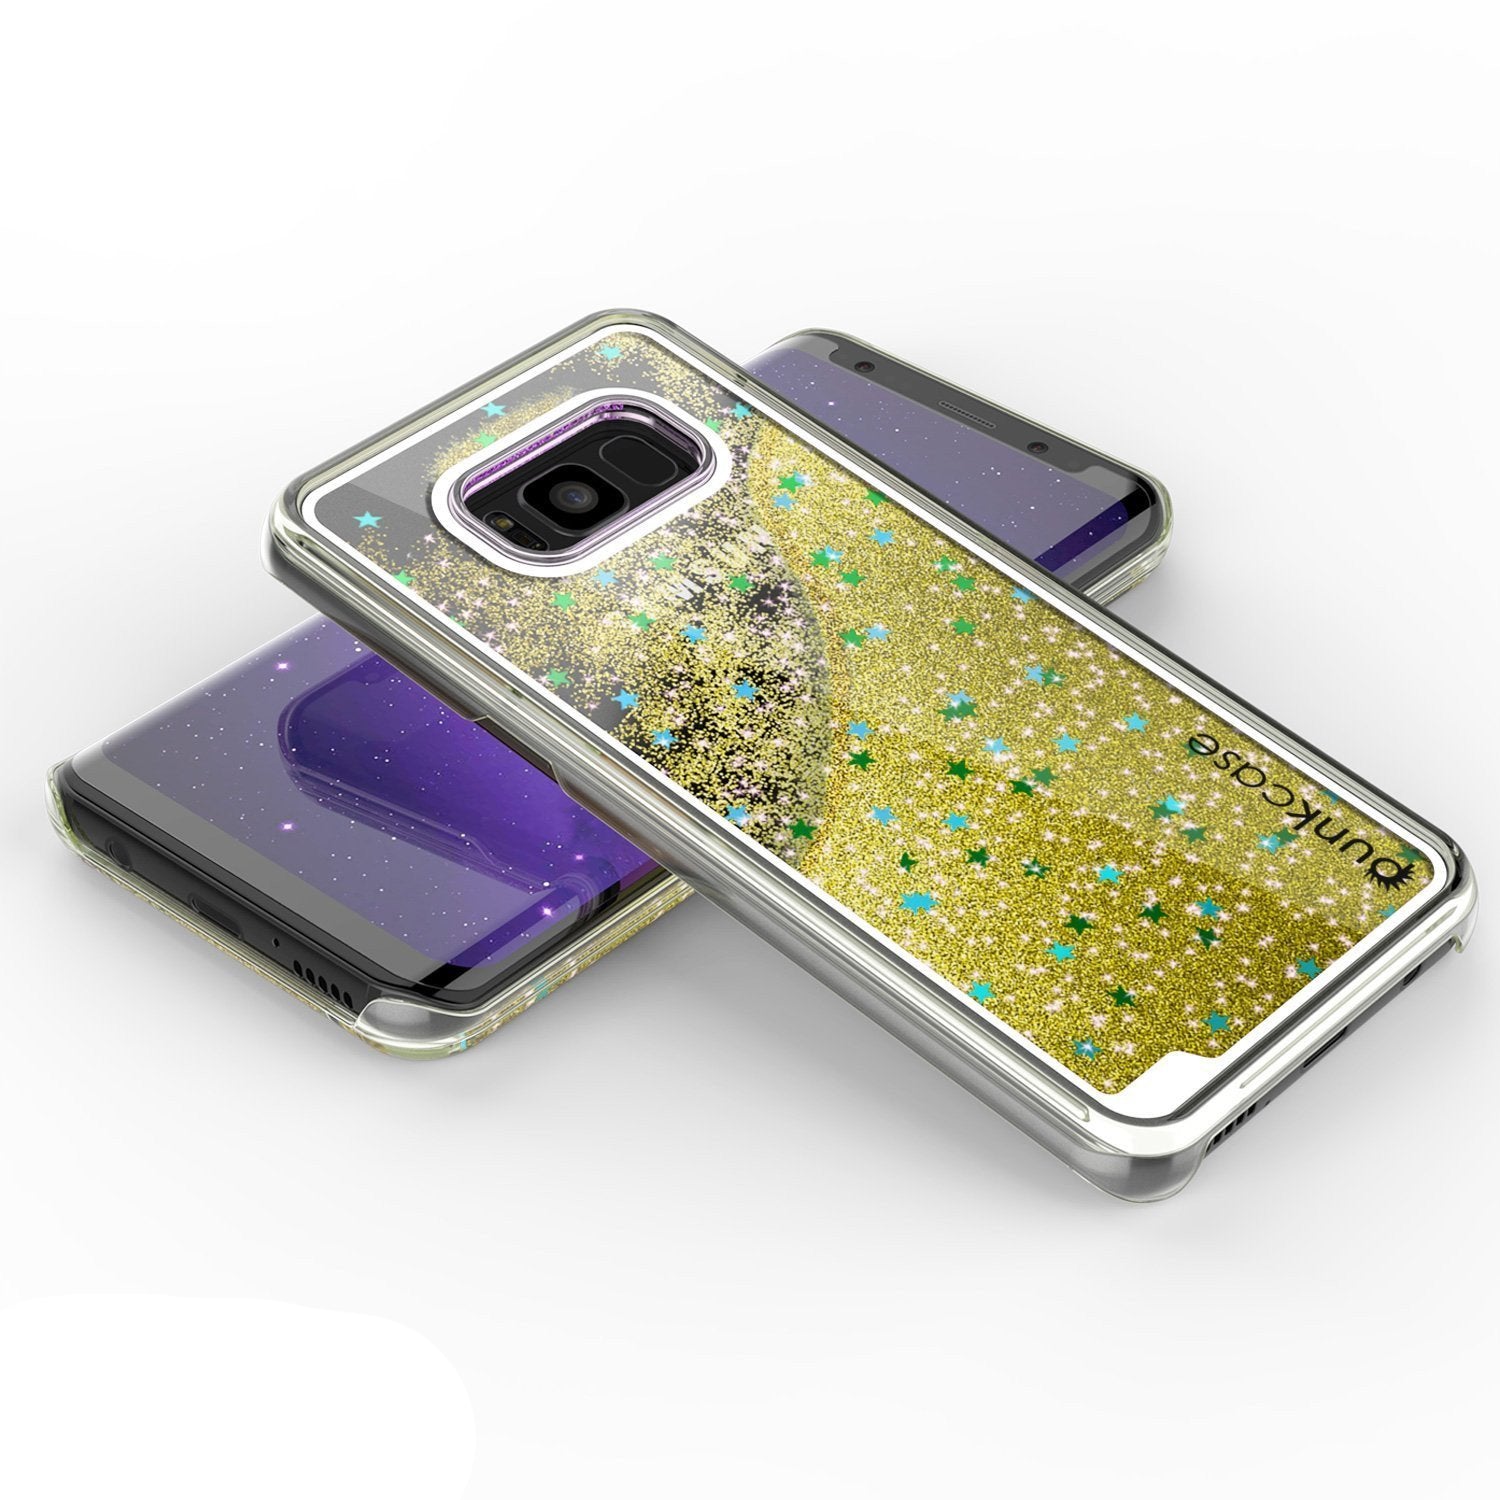 Galaxy S8 Case, Punkcase Liquid Gold Series Protective Glitter Cover